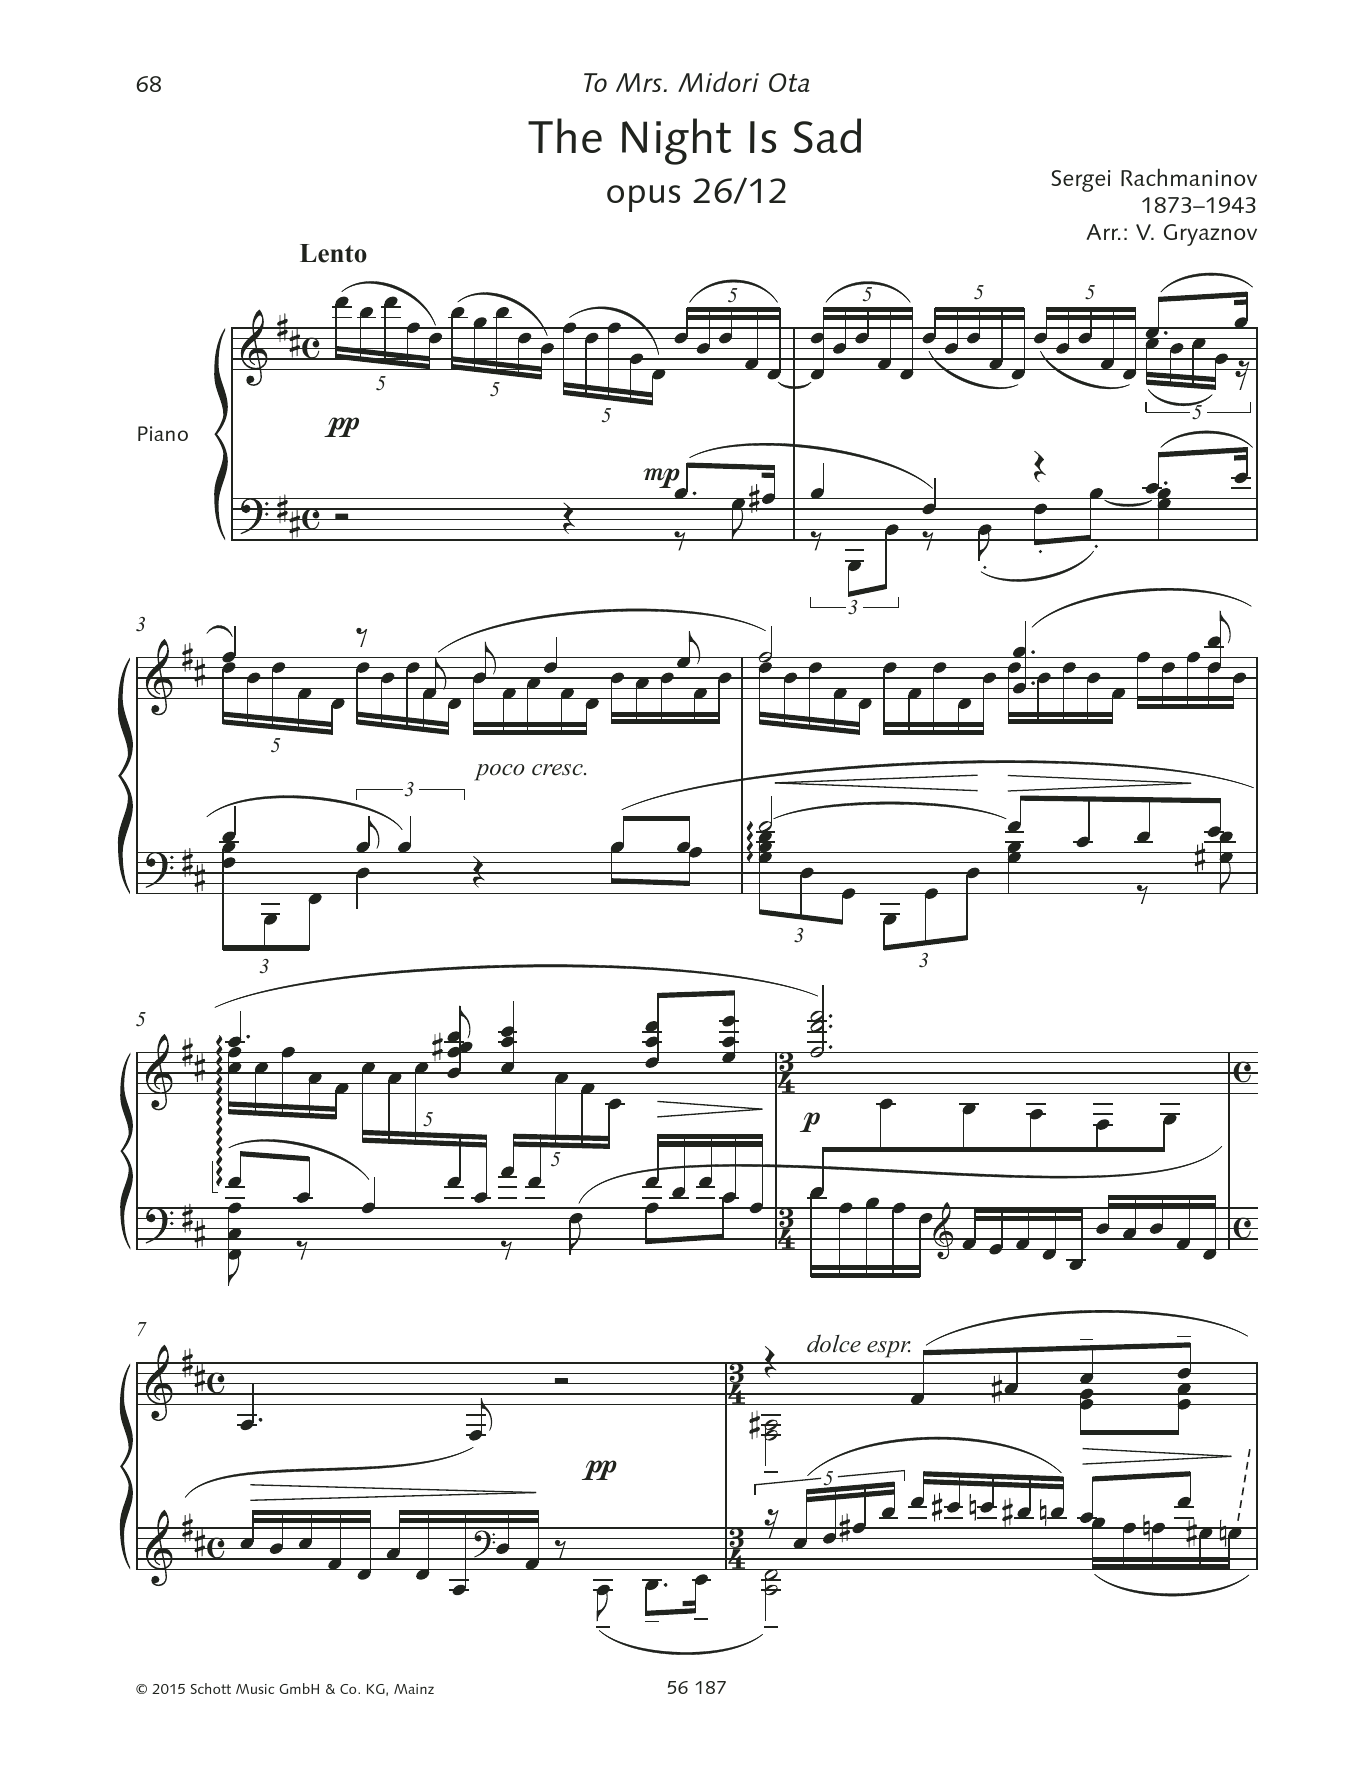 Download Sergei Rachmaninoff The Night is Sad Sheet Music